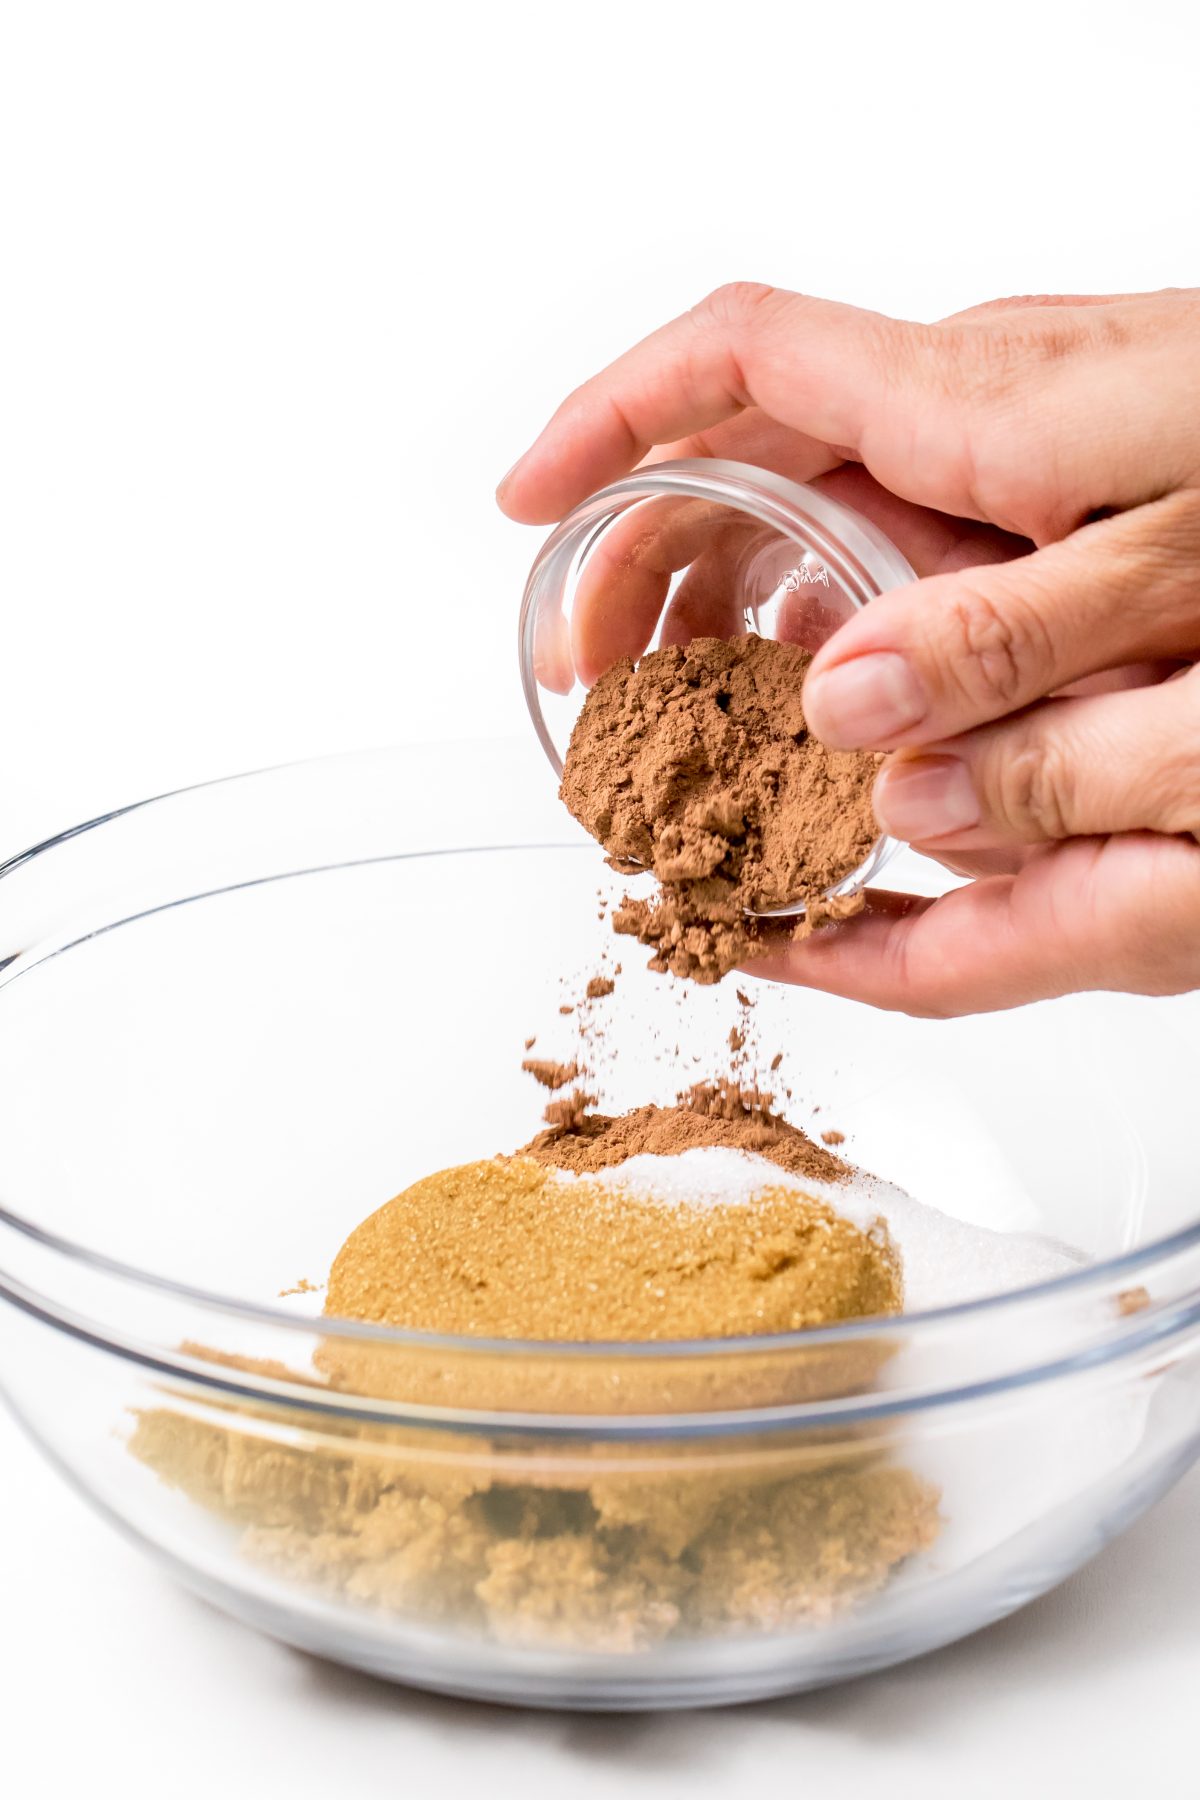 Chocolate sugar scrub - pouring cocoa powder into mixing bowl